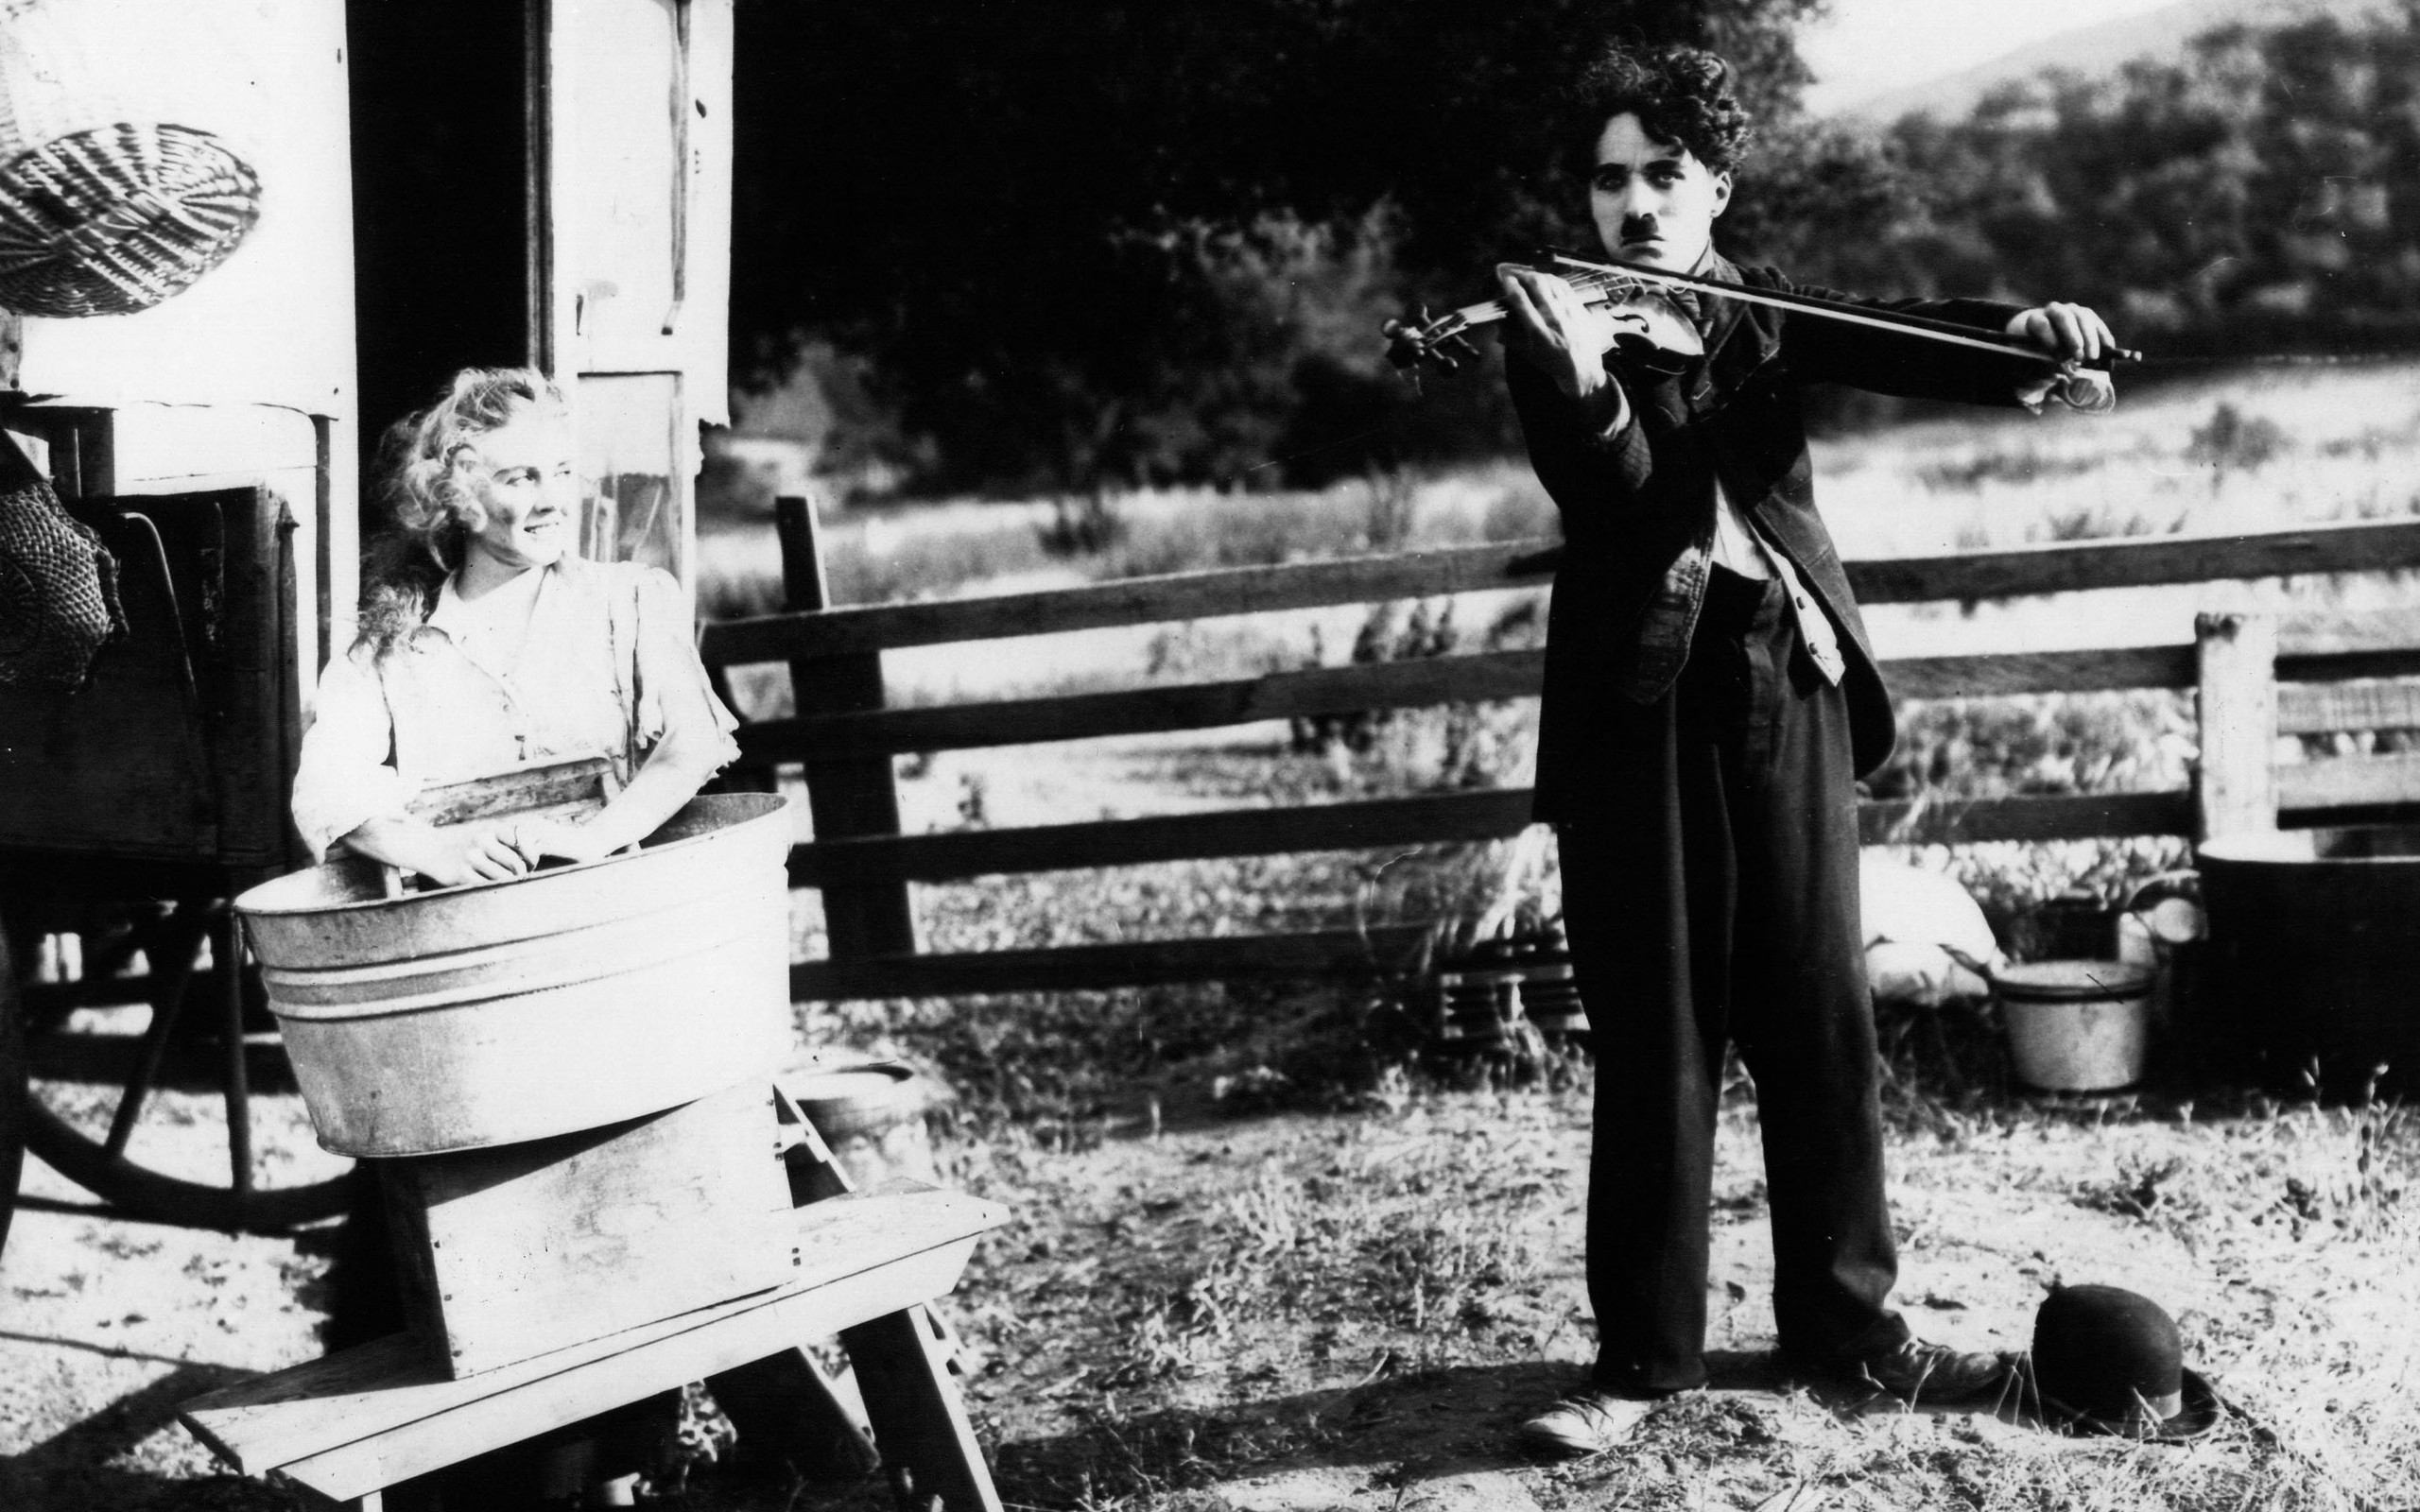 General 2560x1600 Charlie Chaplin The Tramp movies musical instrument violin monochrome men actor vintage